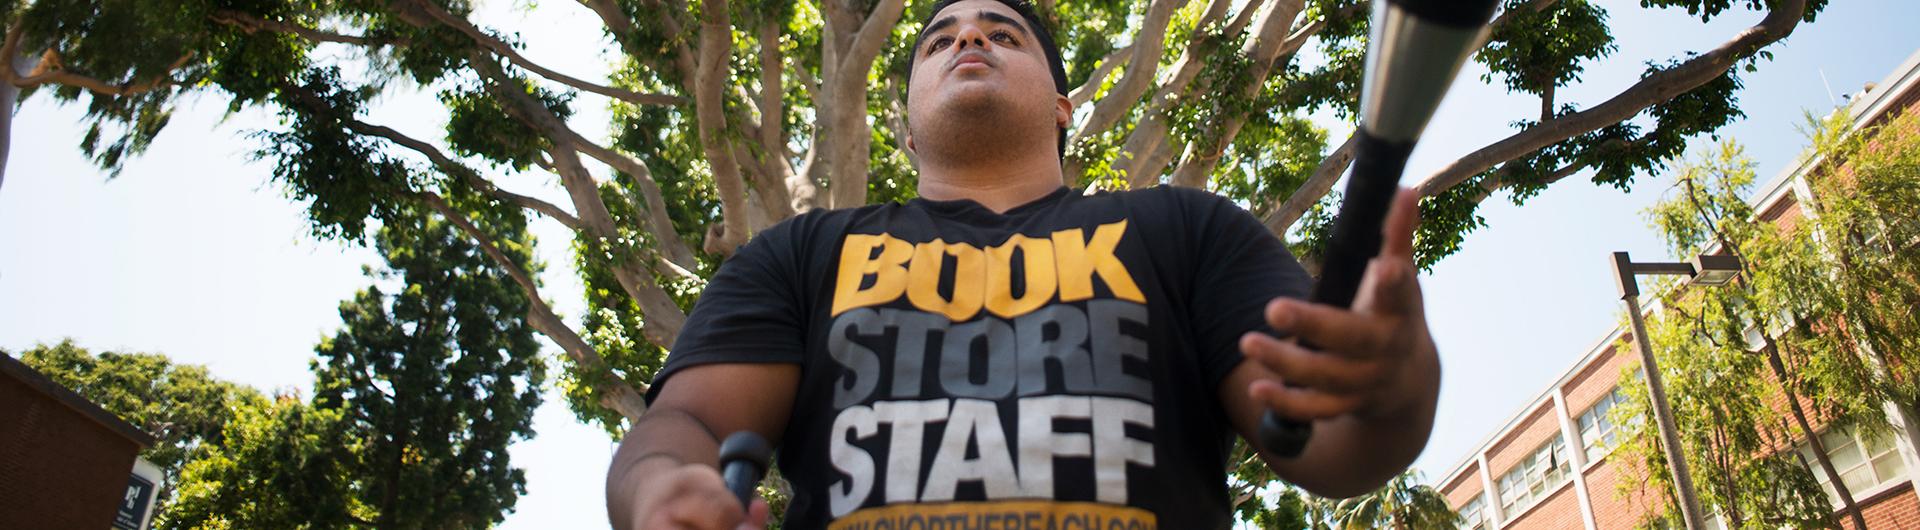 bookstore staff